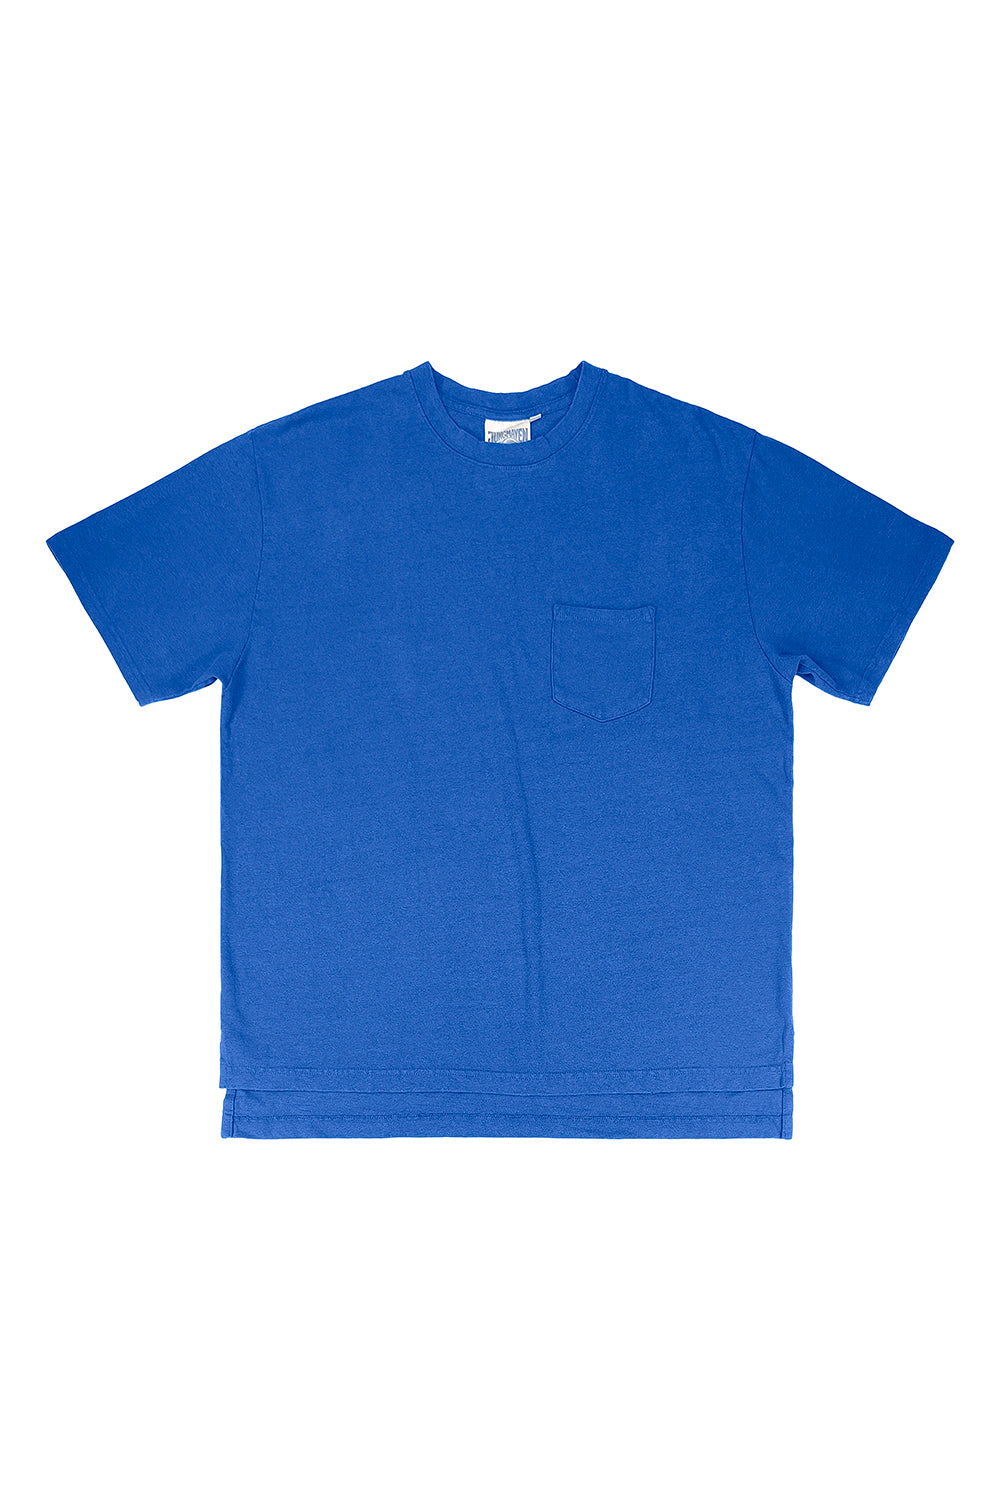 Big Tee | Jungmaven Hemp Clothing & Accessories / Color: Galaxy Blue